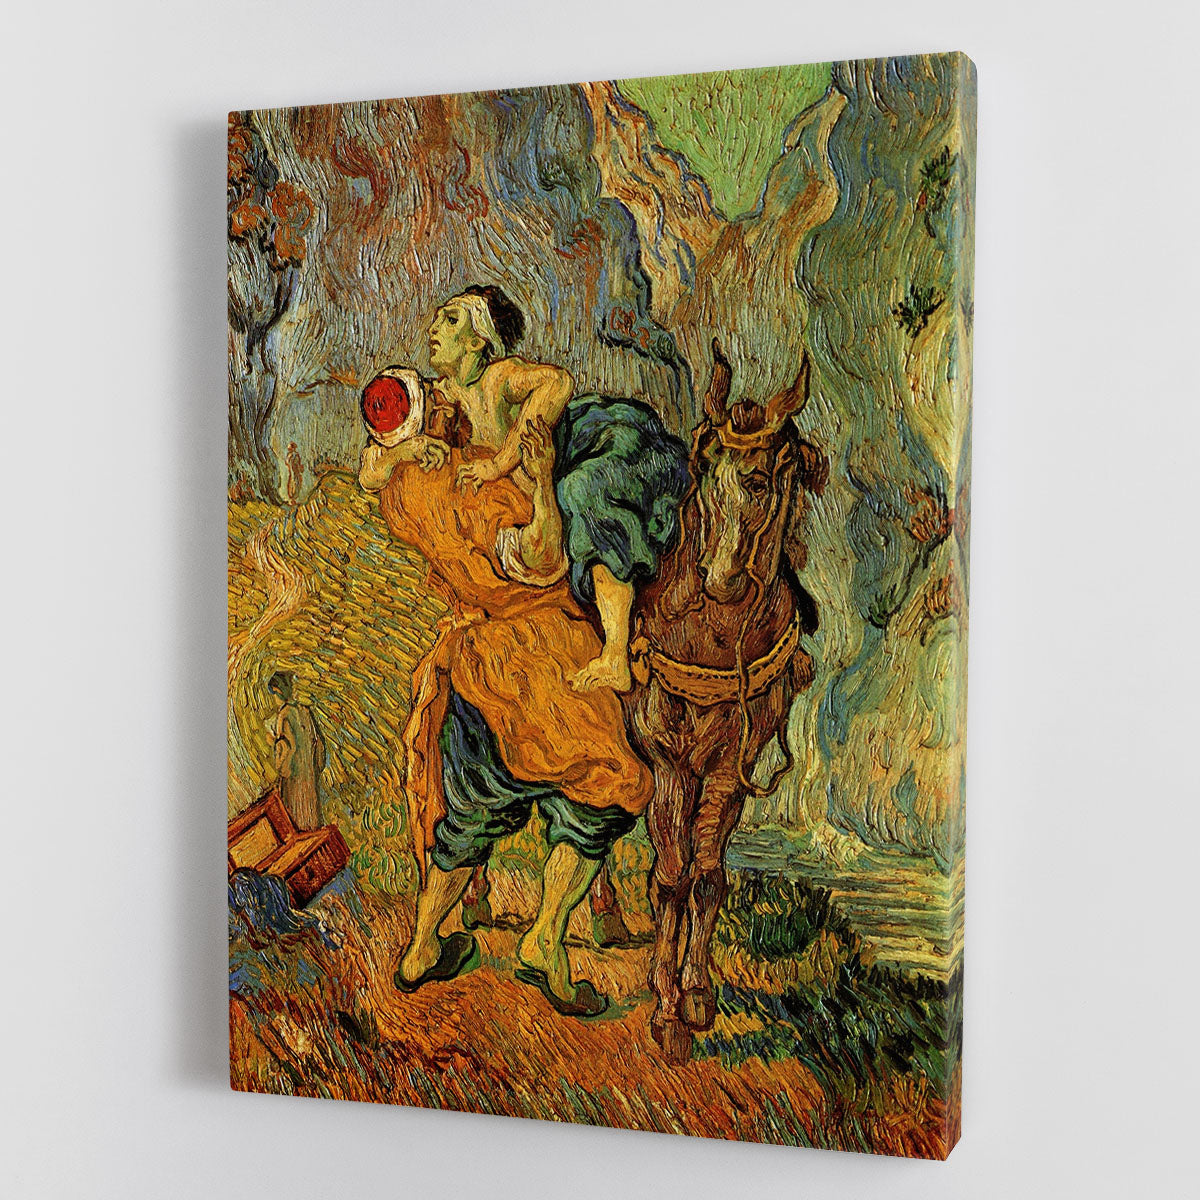 The Good Samaritan after Delacroix by Van Gogh Canvas Print or Poster - Canvas Art Rocks - 1